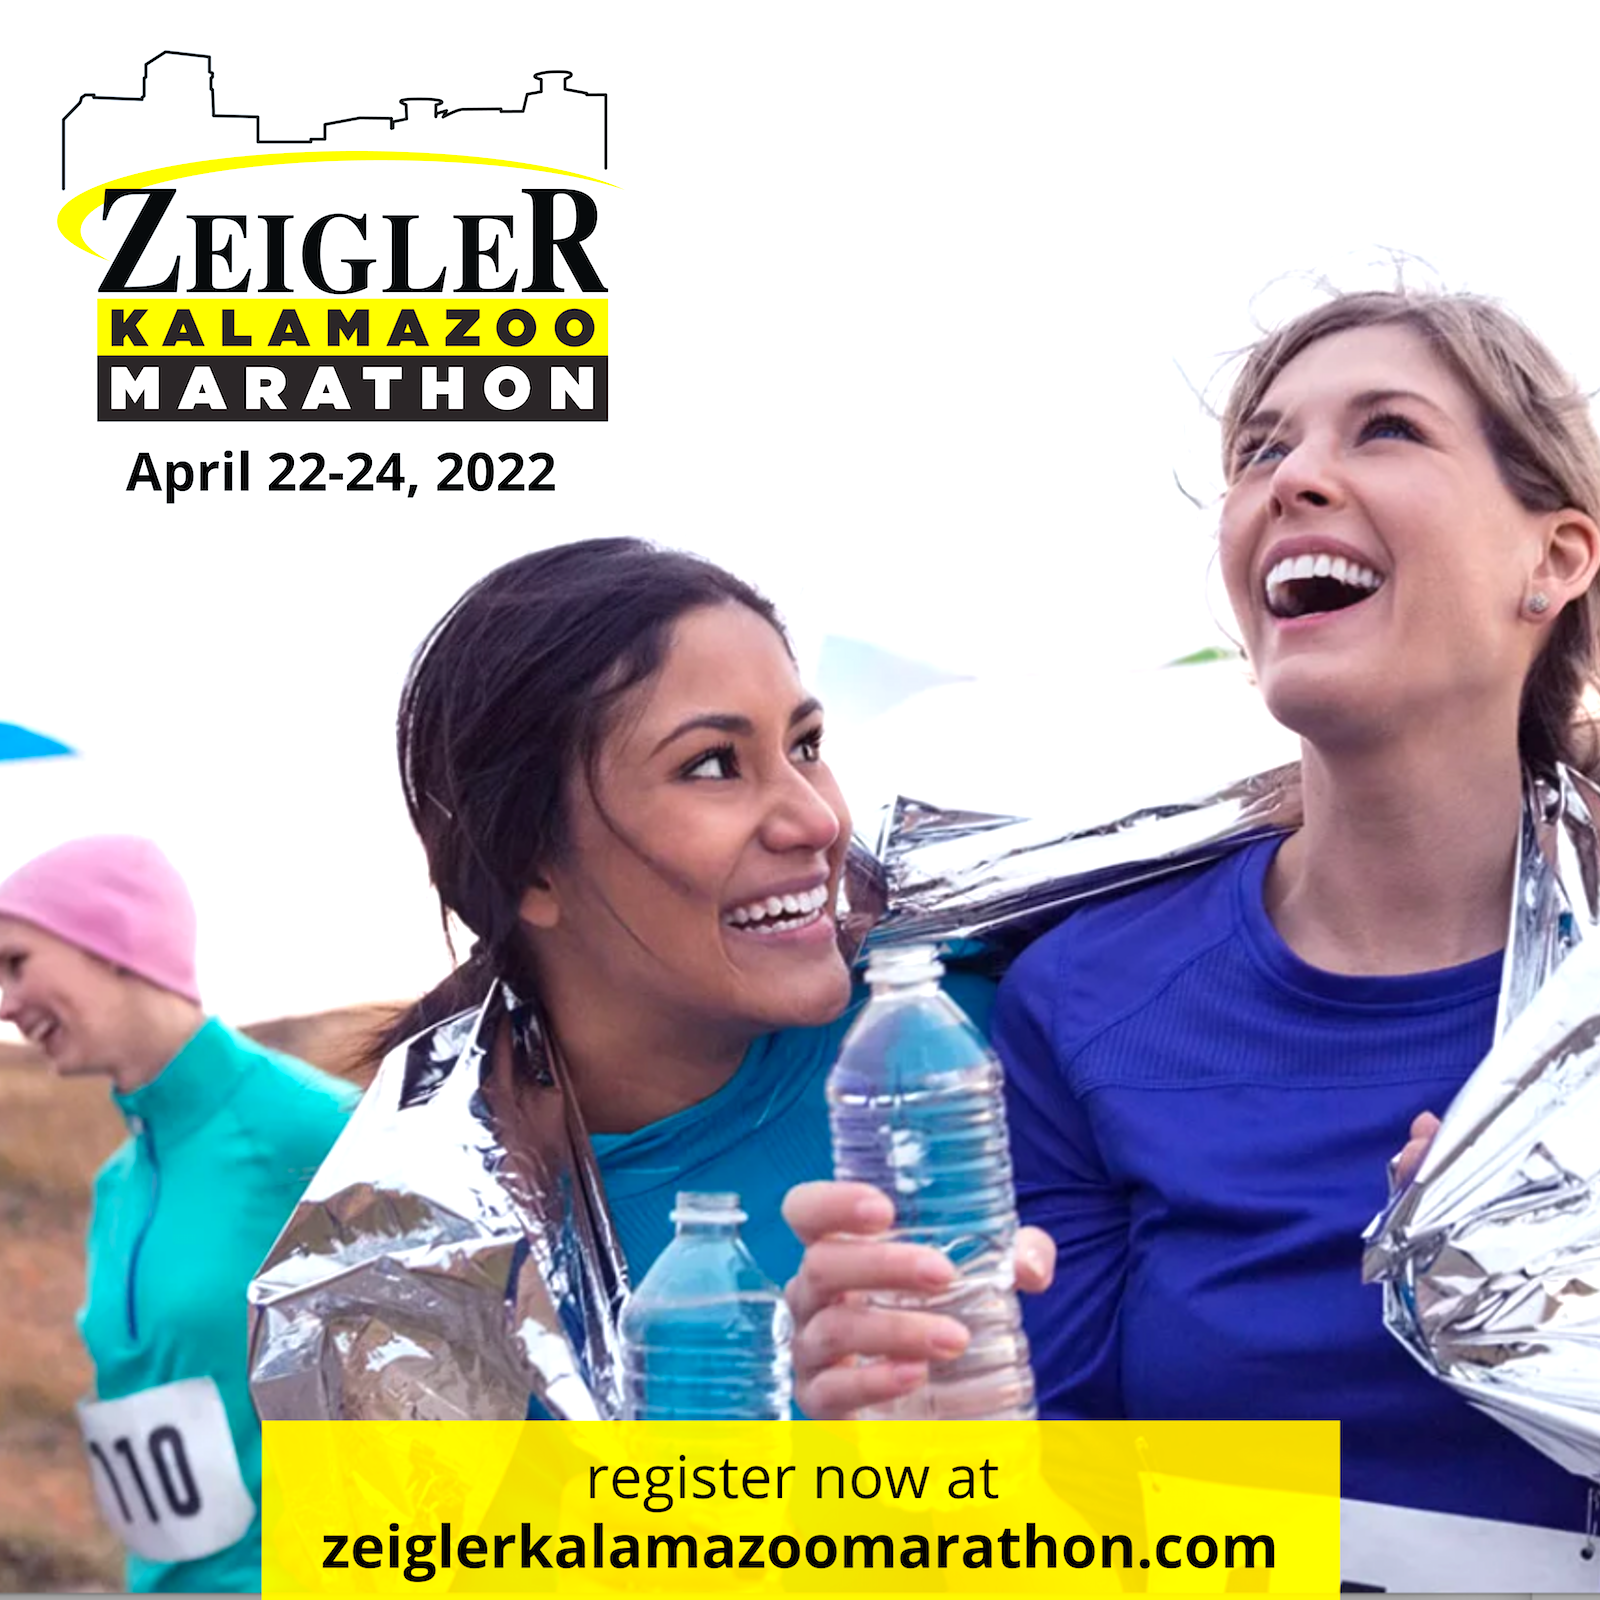 The Kalamazoo Marathon/Borgess Run Returns as Zeigler Kalamazoo Marathon Honoring Local Race Legacy.  Registration now open at zeiglerkalamazoomarathon.com